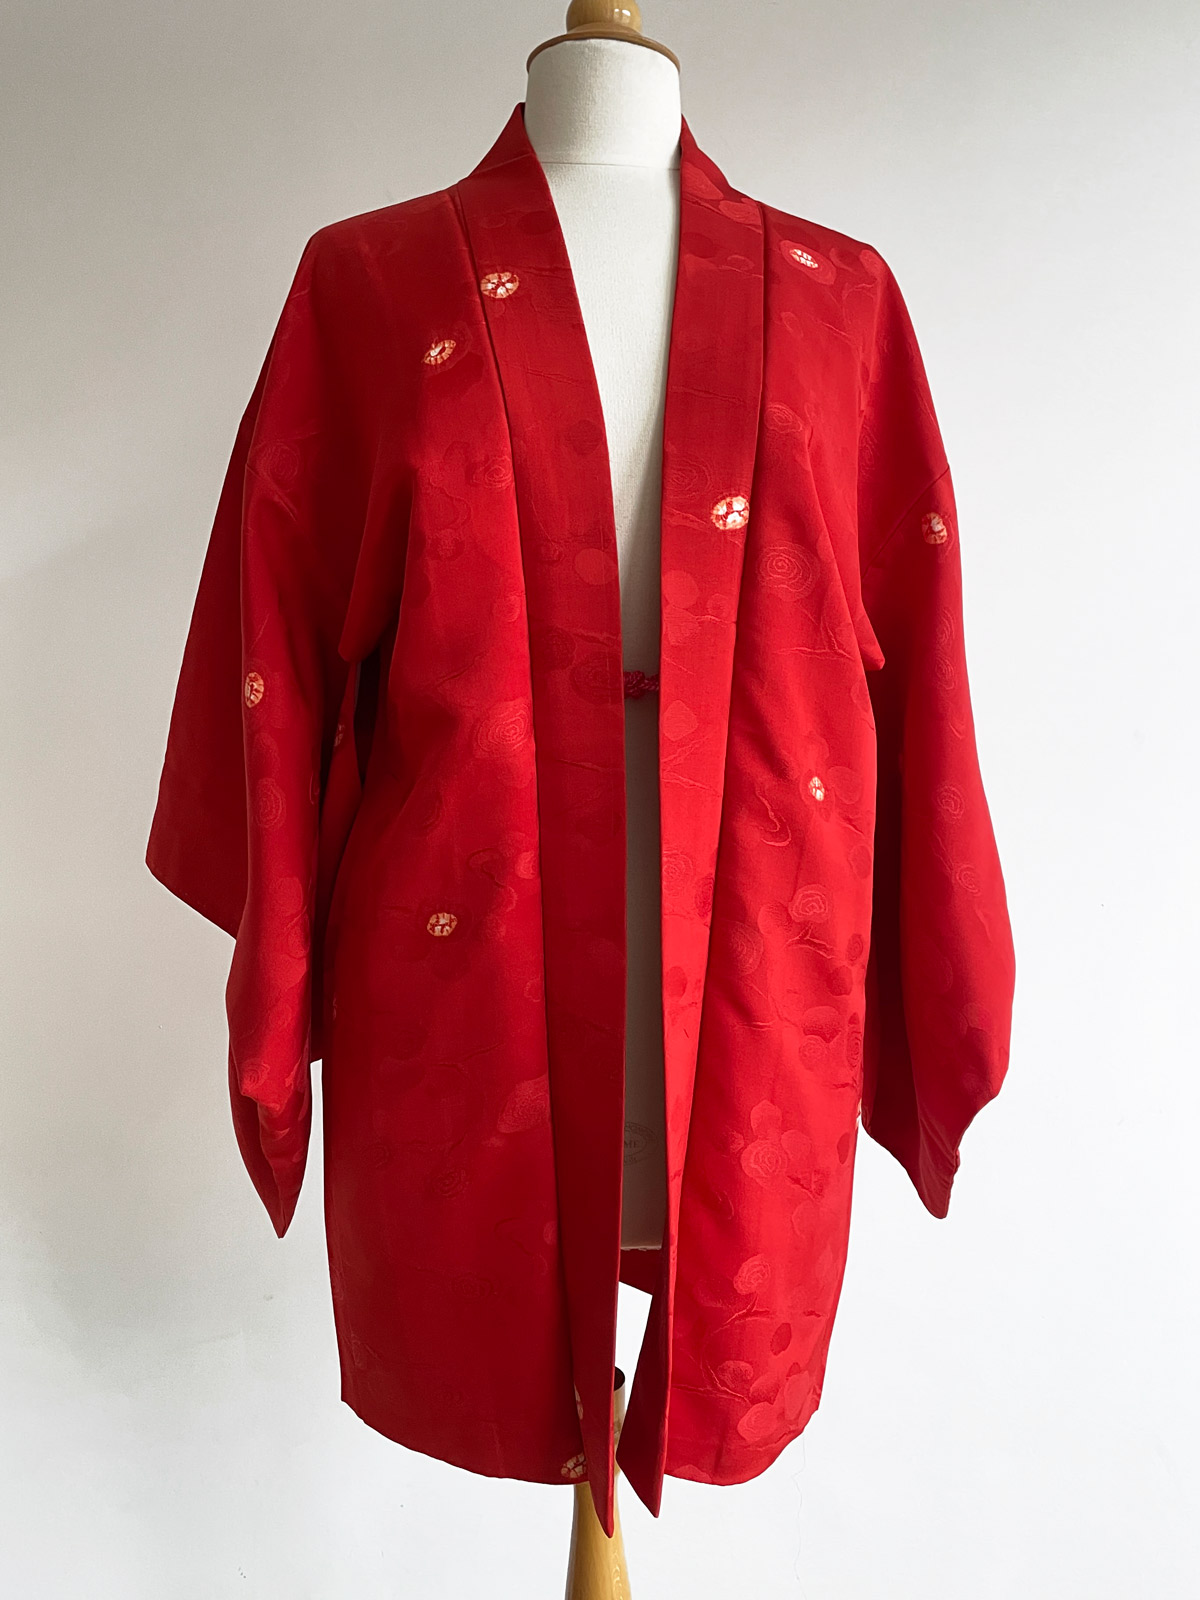 Aka – silk Kimono jacket in bright red